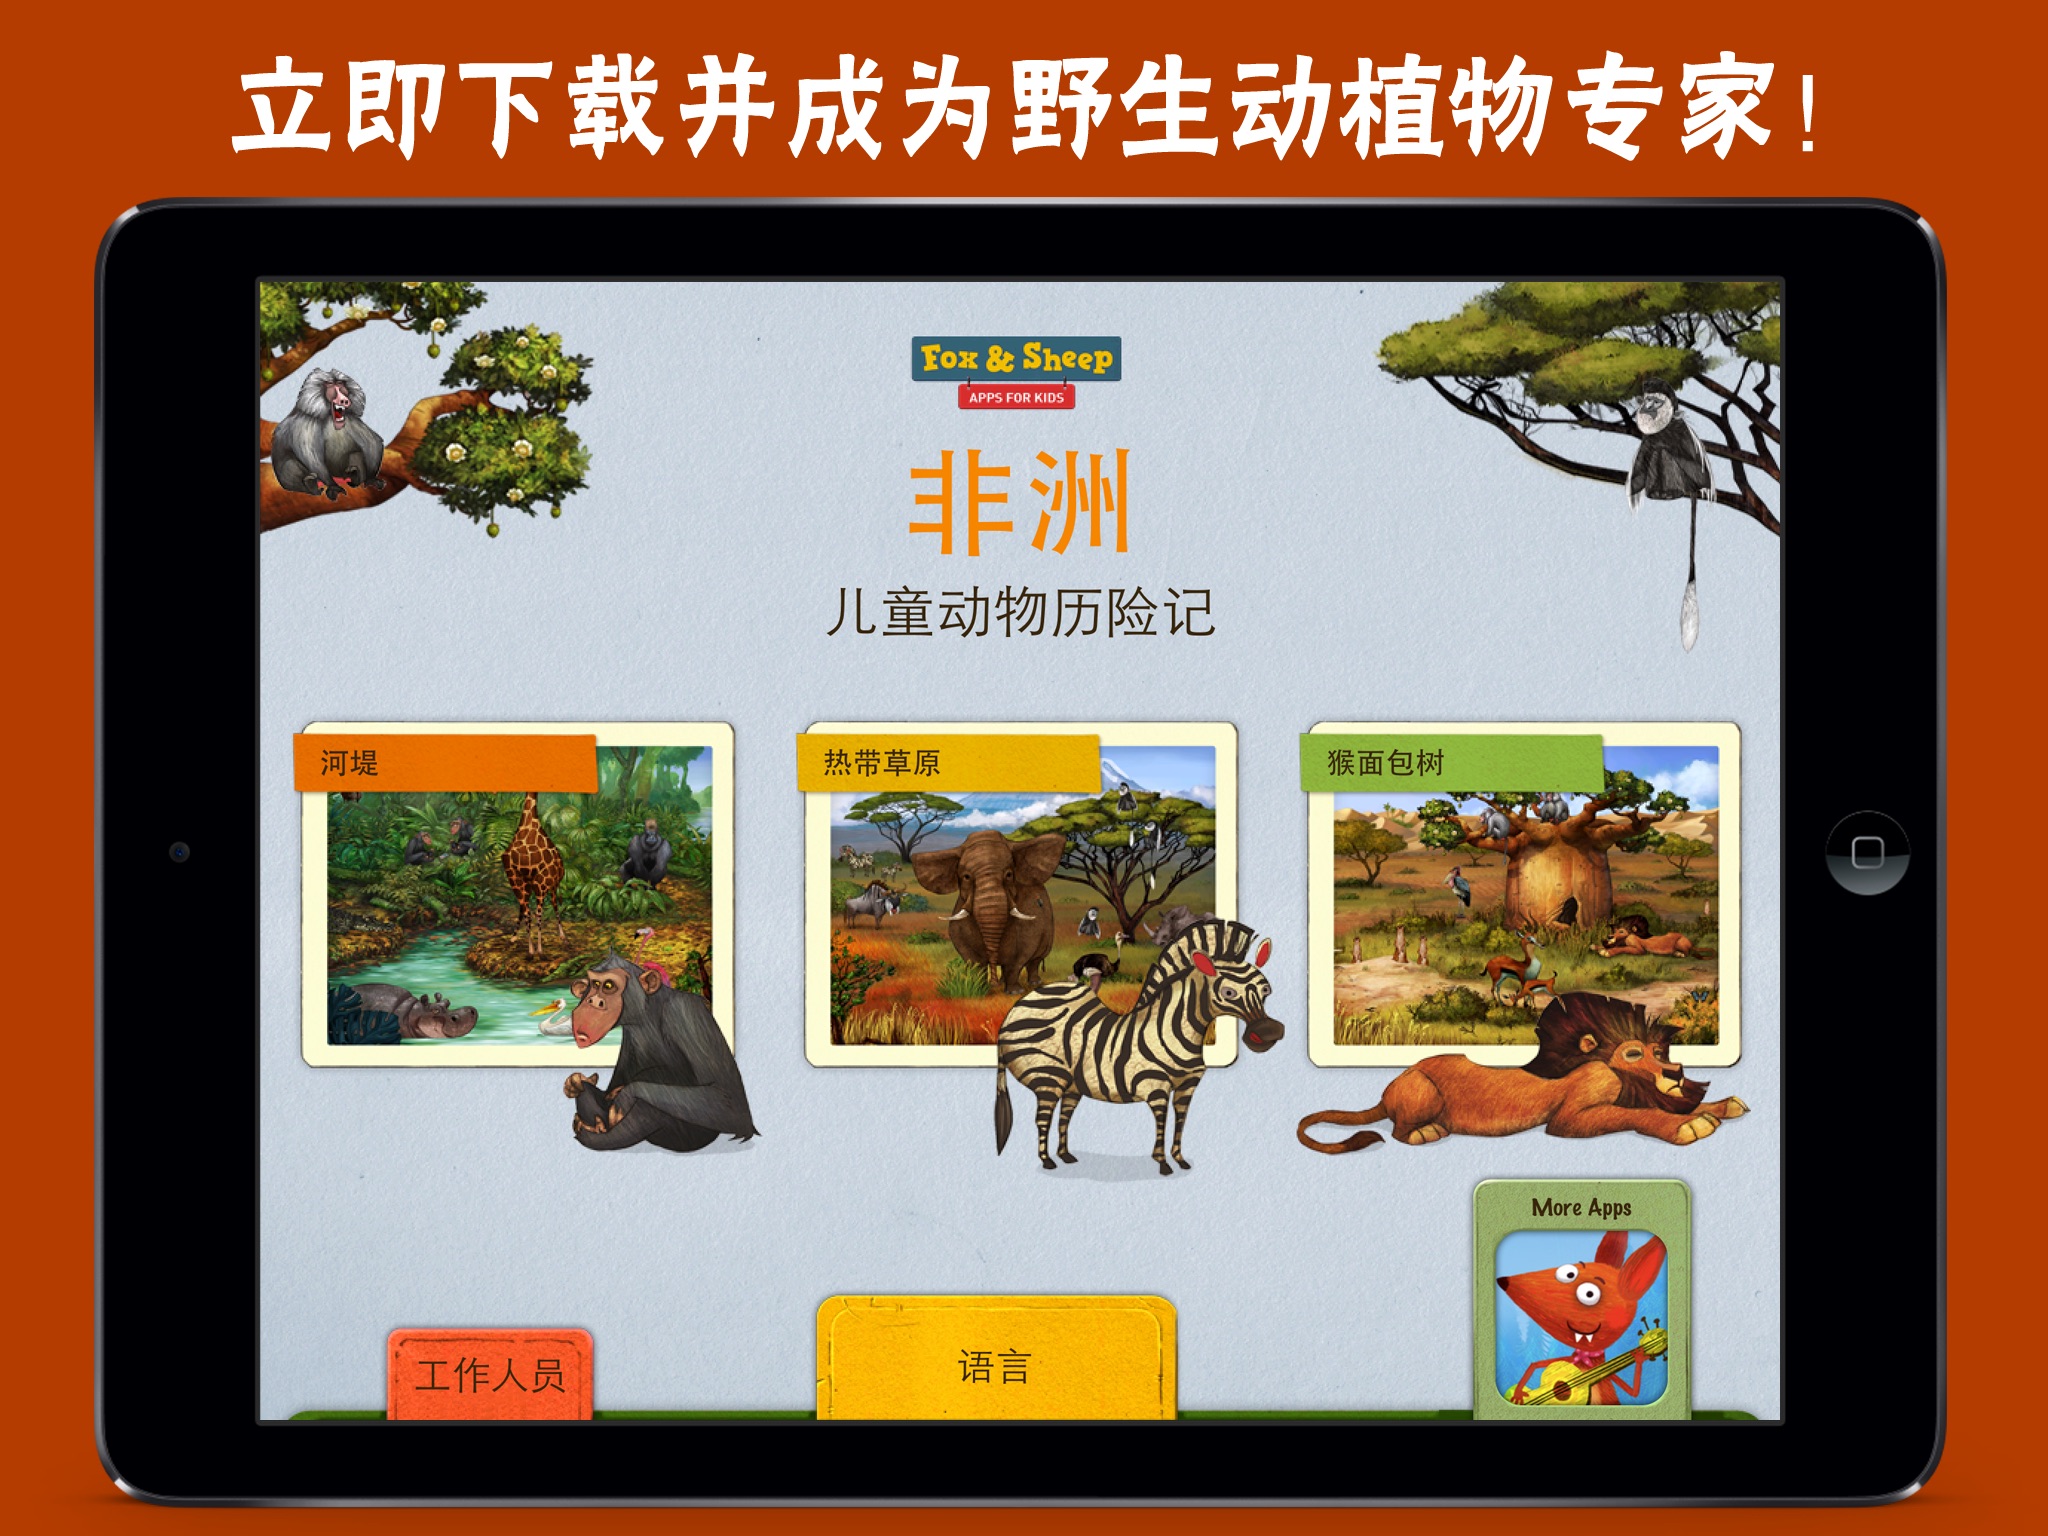 Africa - Animal Adventures for Kids screenshot 4